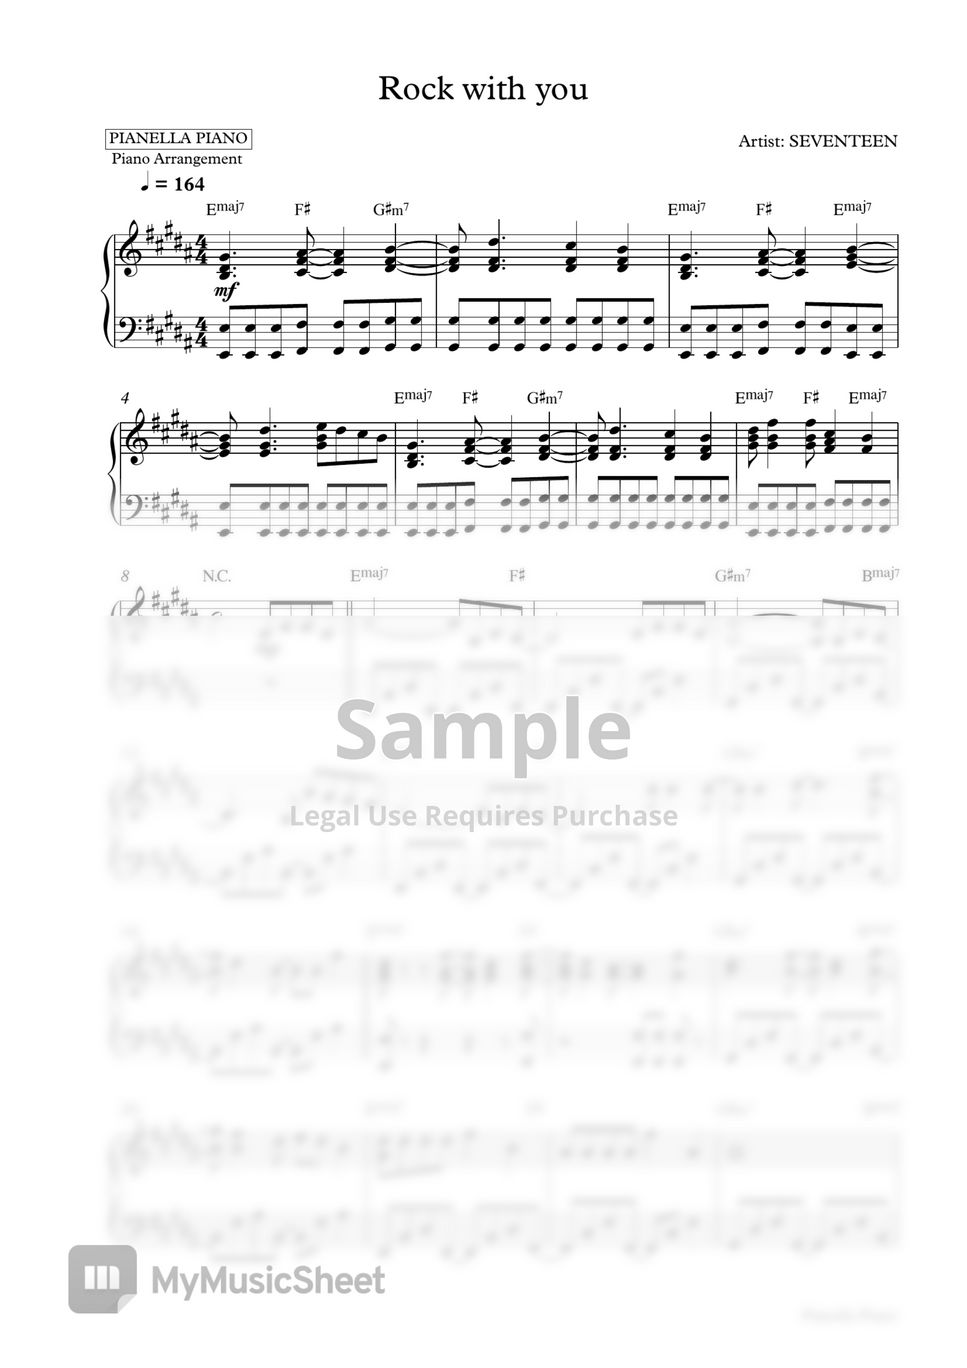 SEVENTEEN - Rock with you (2 PDF: in Original Key B Major & Easier Key C Major) by Pianella Piano